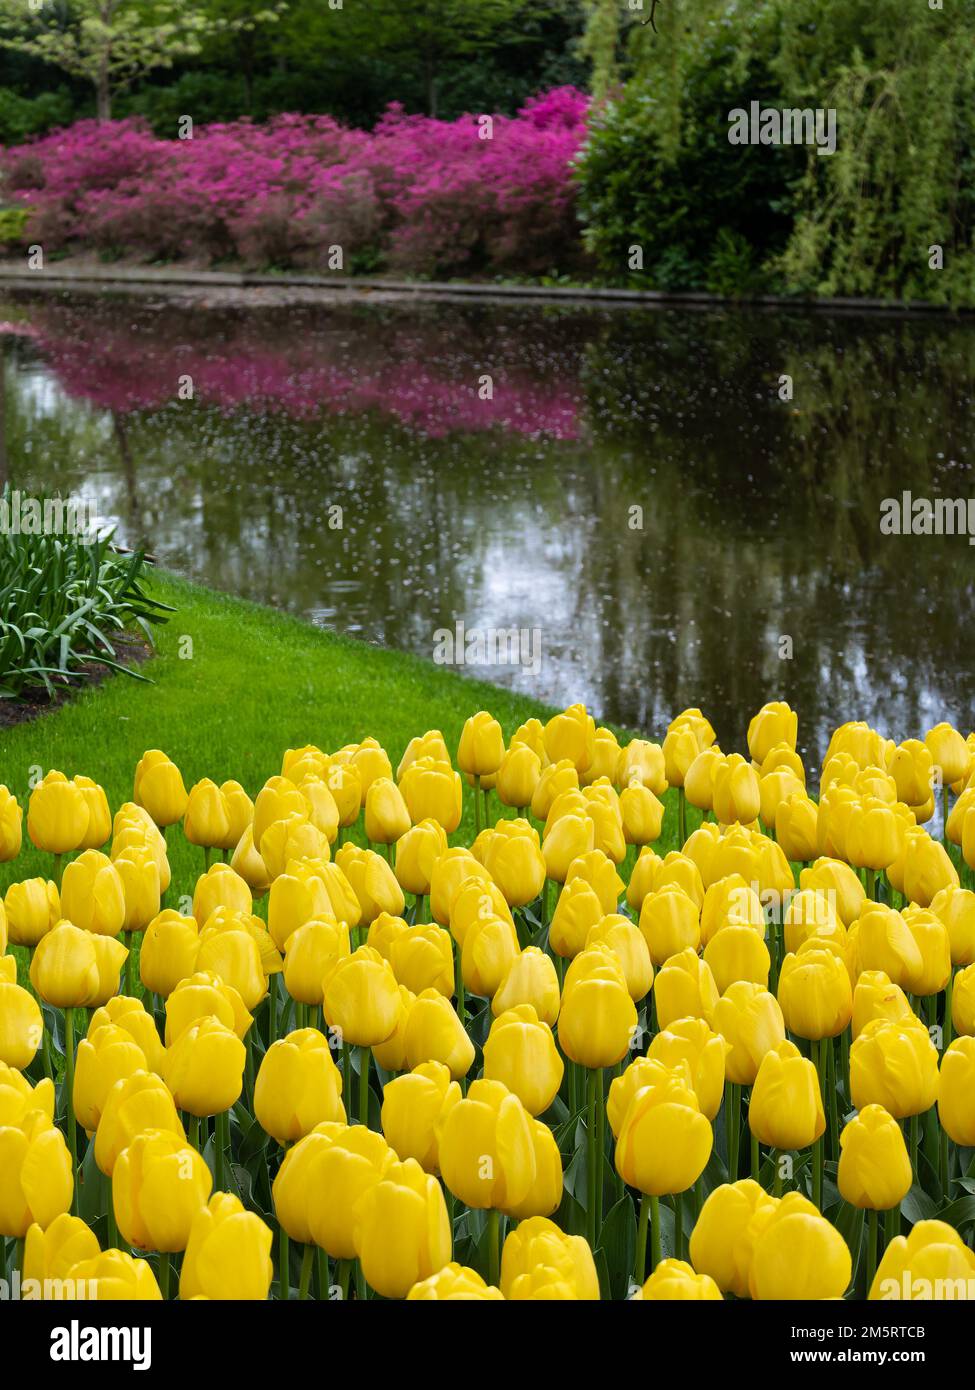 Gelb blühende Tulpen im Park Keukenhof in den Niederlanden Stockfoto